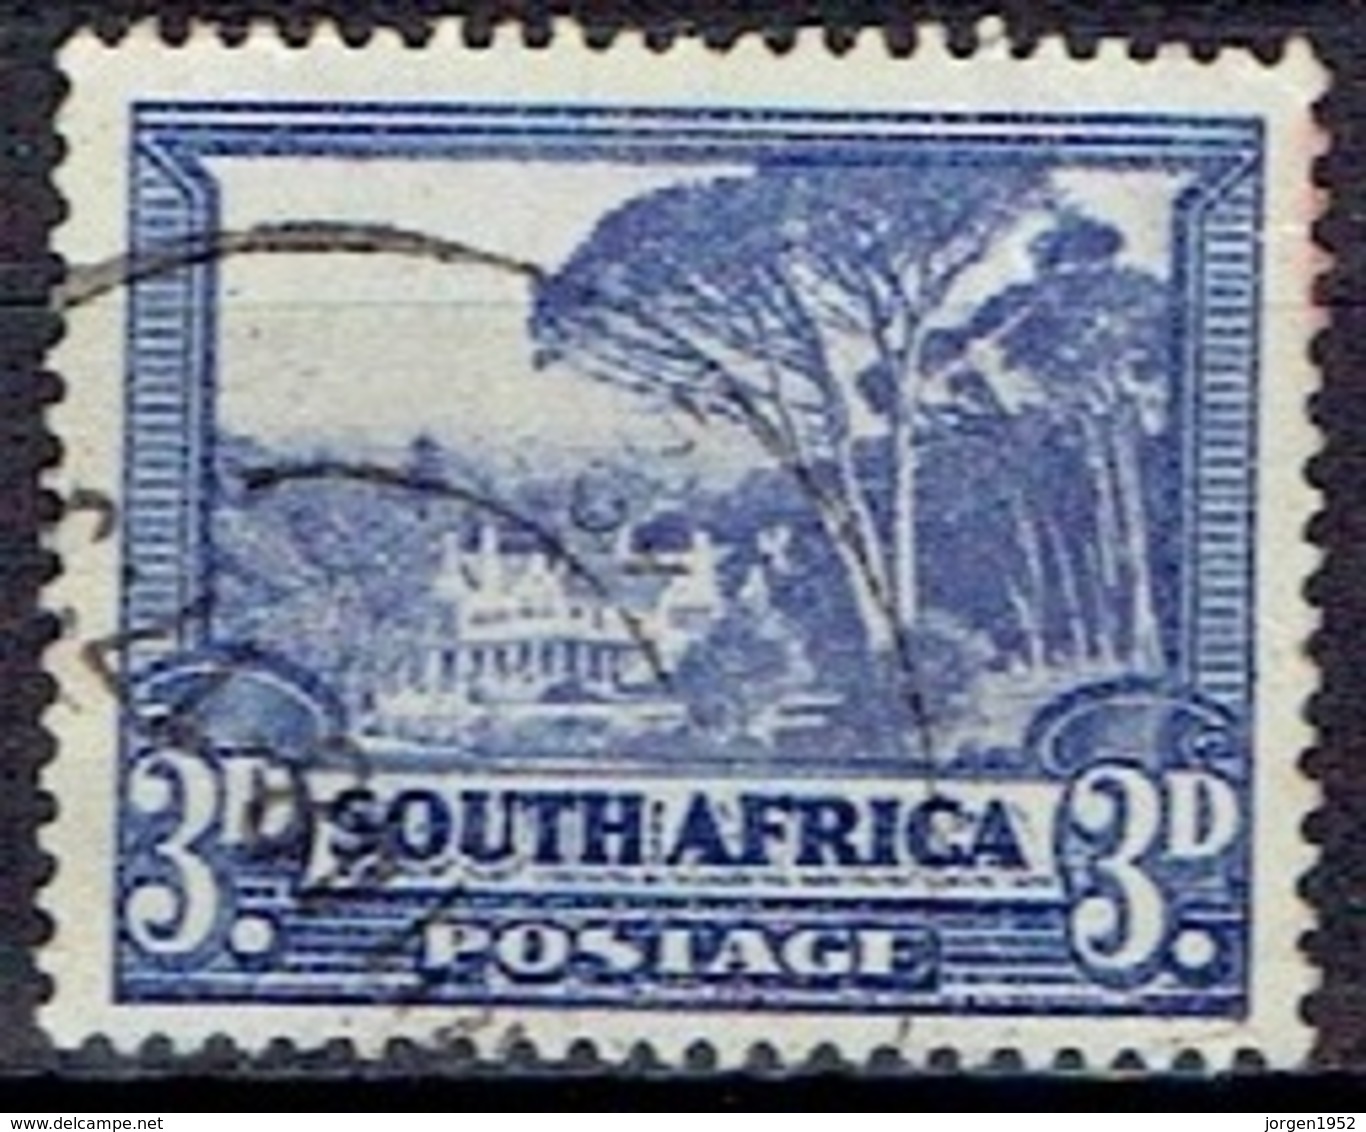 GREAT BRITAIN # SOUTH AFRICA FROM 1930-45  STAMPWORLD 56 - Nouvelle République (1886-1887)